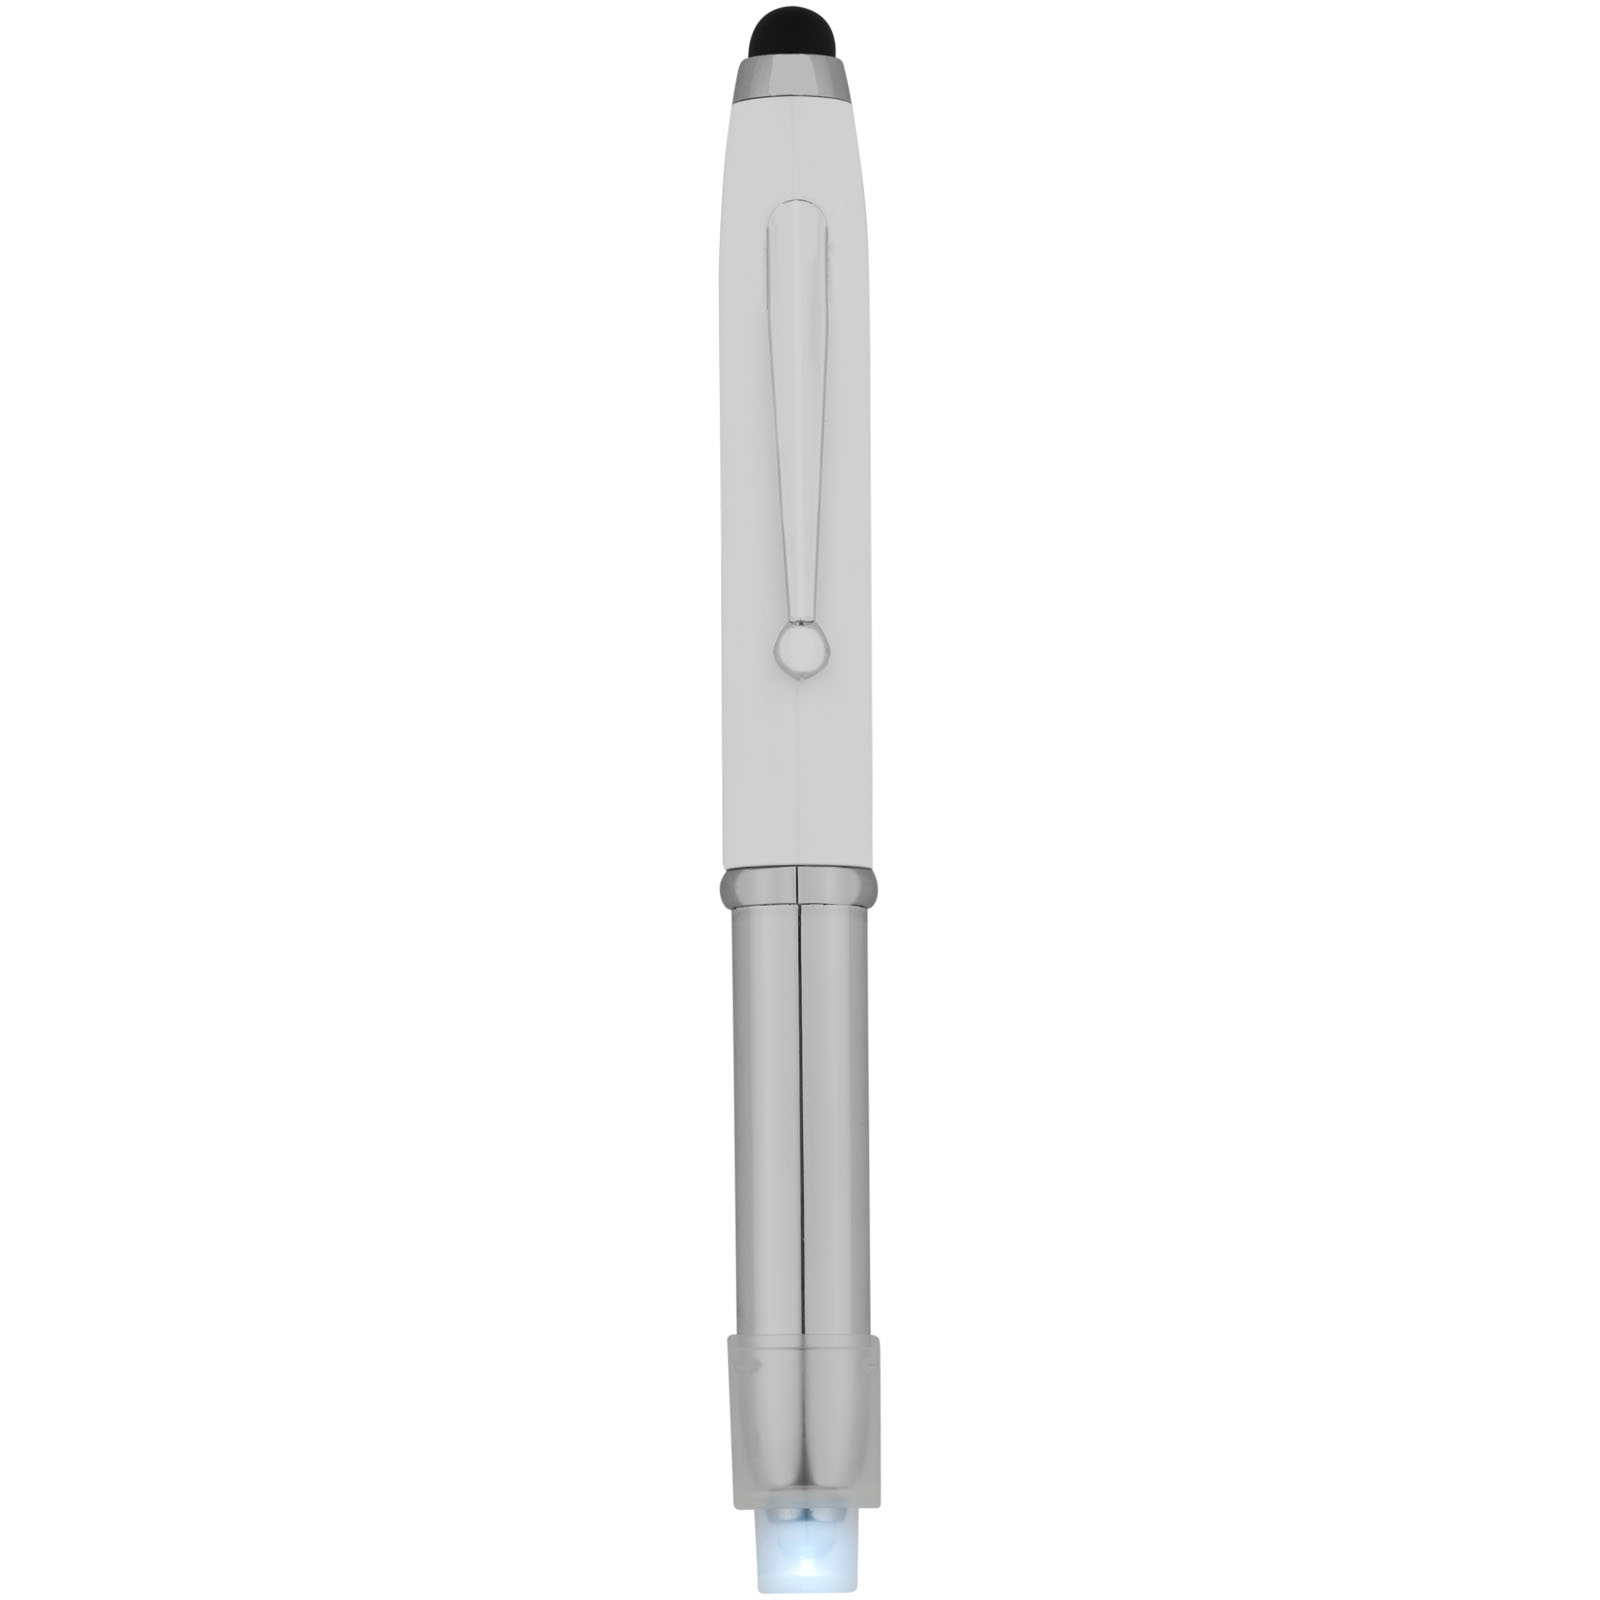 Advertising Ballpoint Pens - Xenon stylus ballpoint pen with LED light - 3